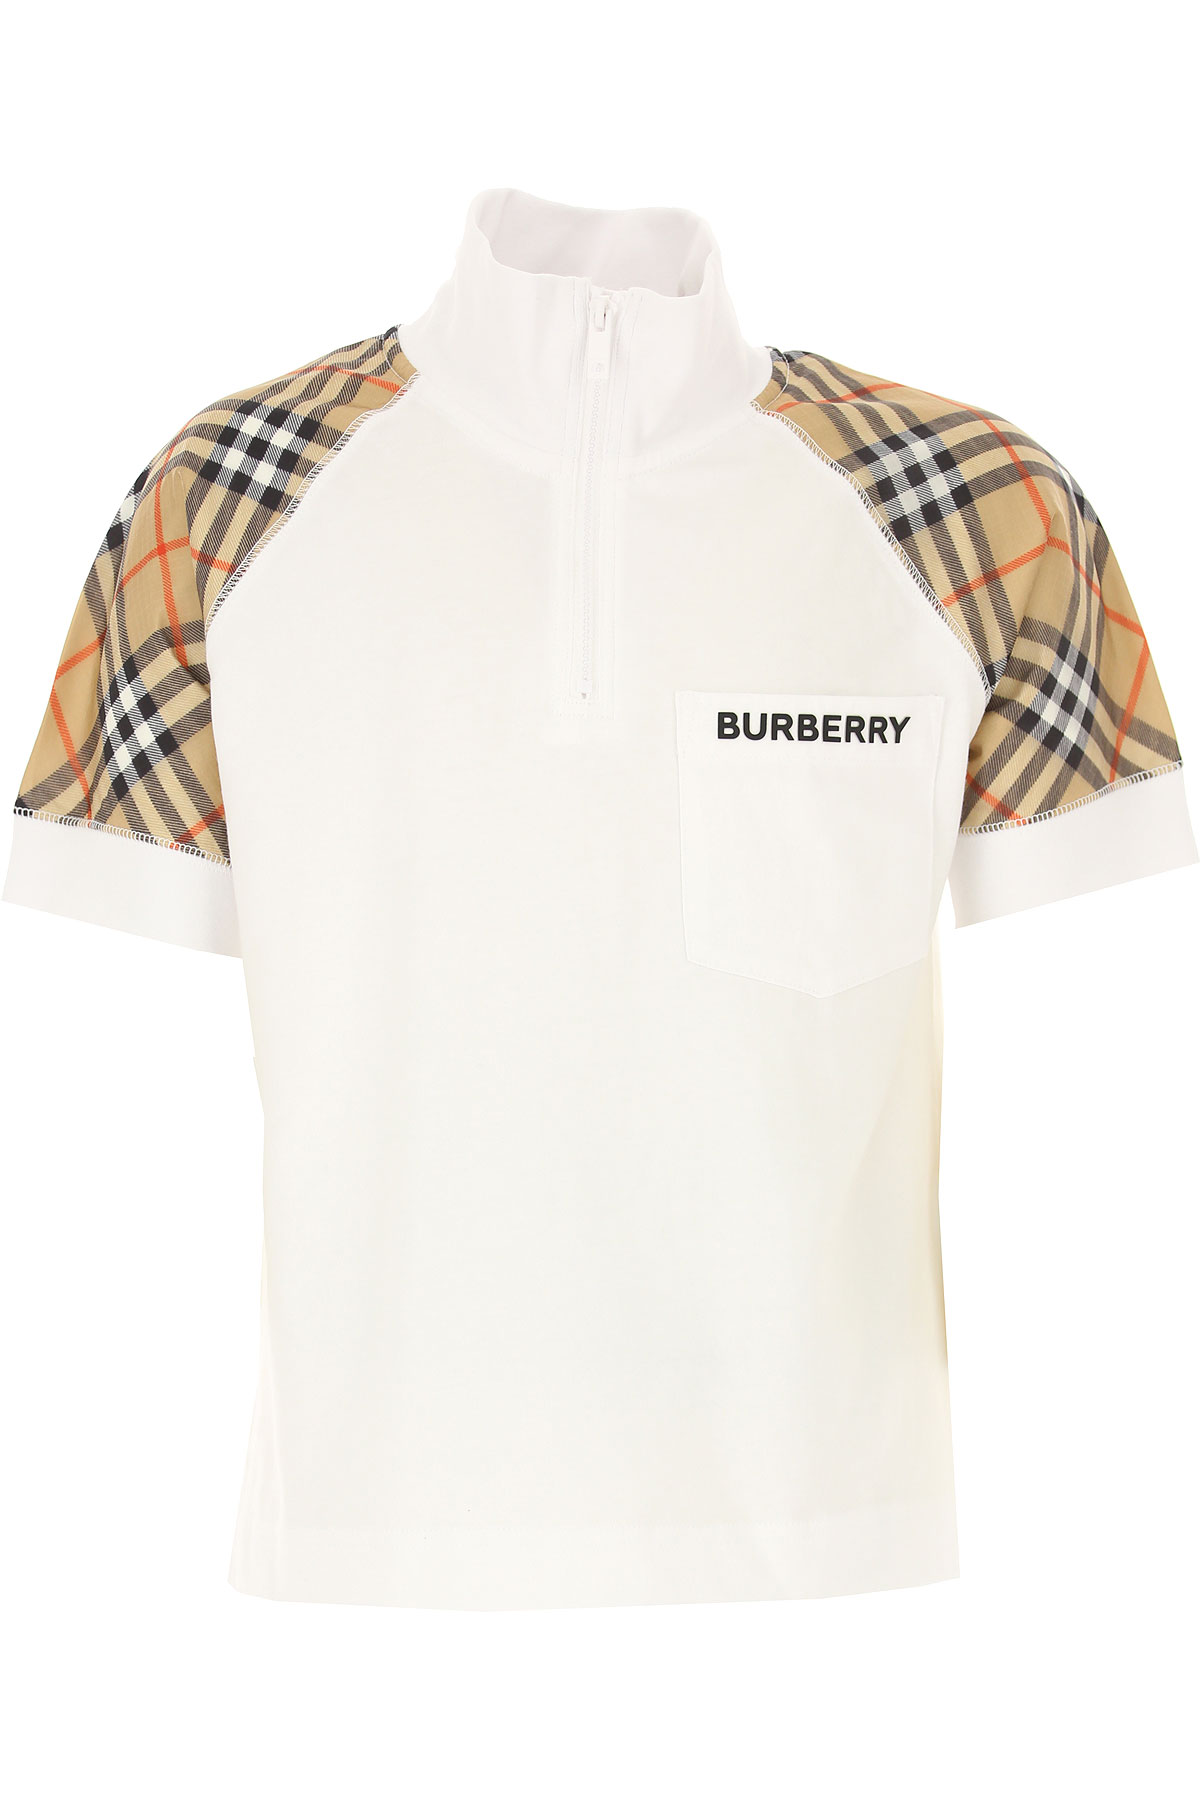 Burberry Kinder T-Shirt für Jungen Günstig im Sale, Weiss, Baumwolle, 2017, 10Y 3Y 4Y 6Y 8Y